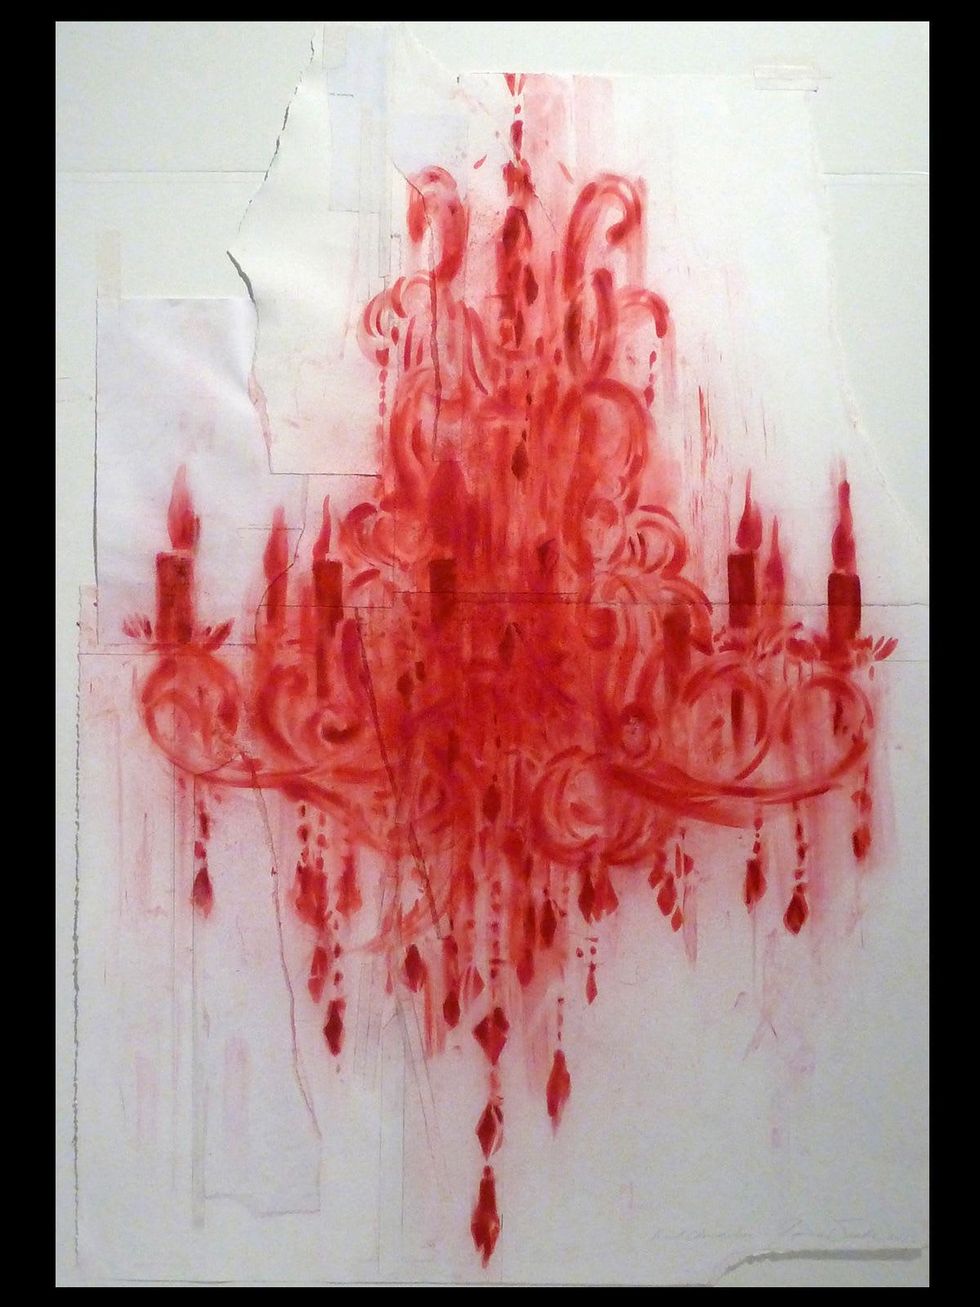 Texas Contemporary Art Fair, show artwork, October 2012, James Drake - Red Chandelier, BLACK SPACE